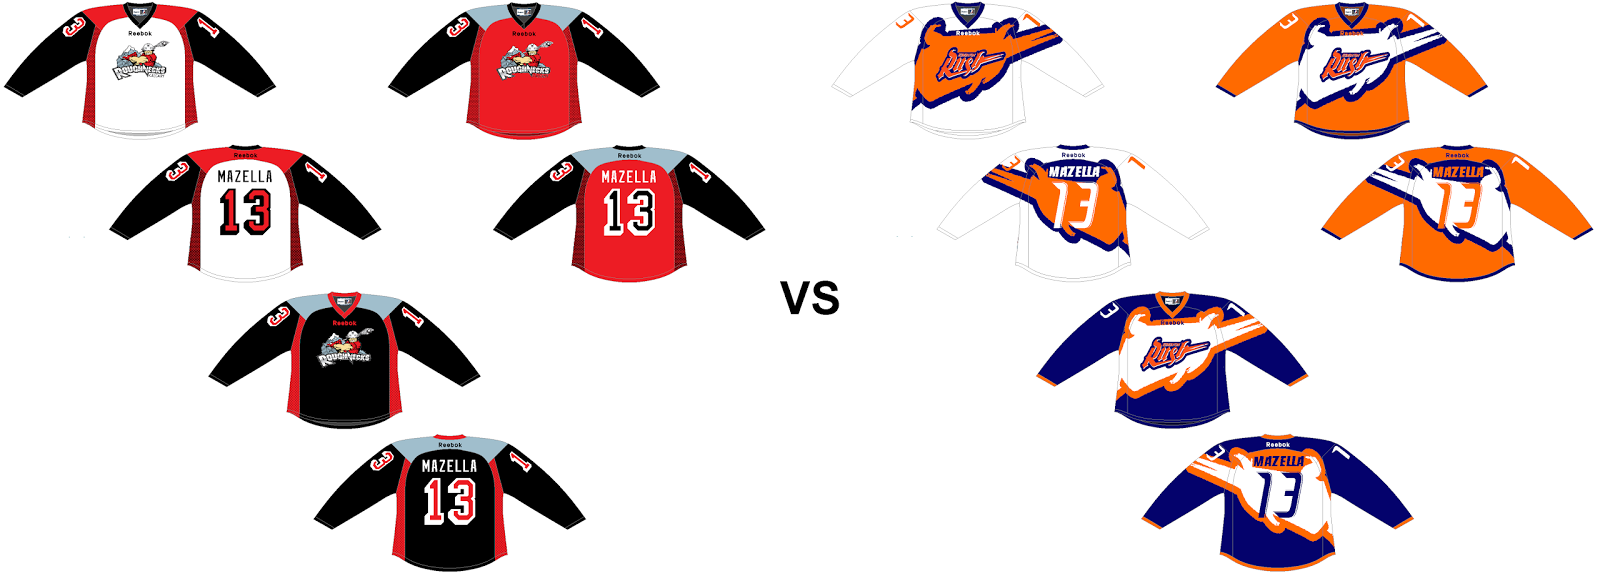 Brandon Wheat Kings Road Uniform - Western Hockey League (WHL) - Chris  Creamer's Sports Logos Page 